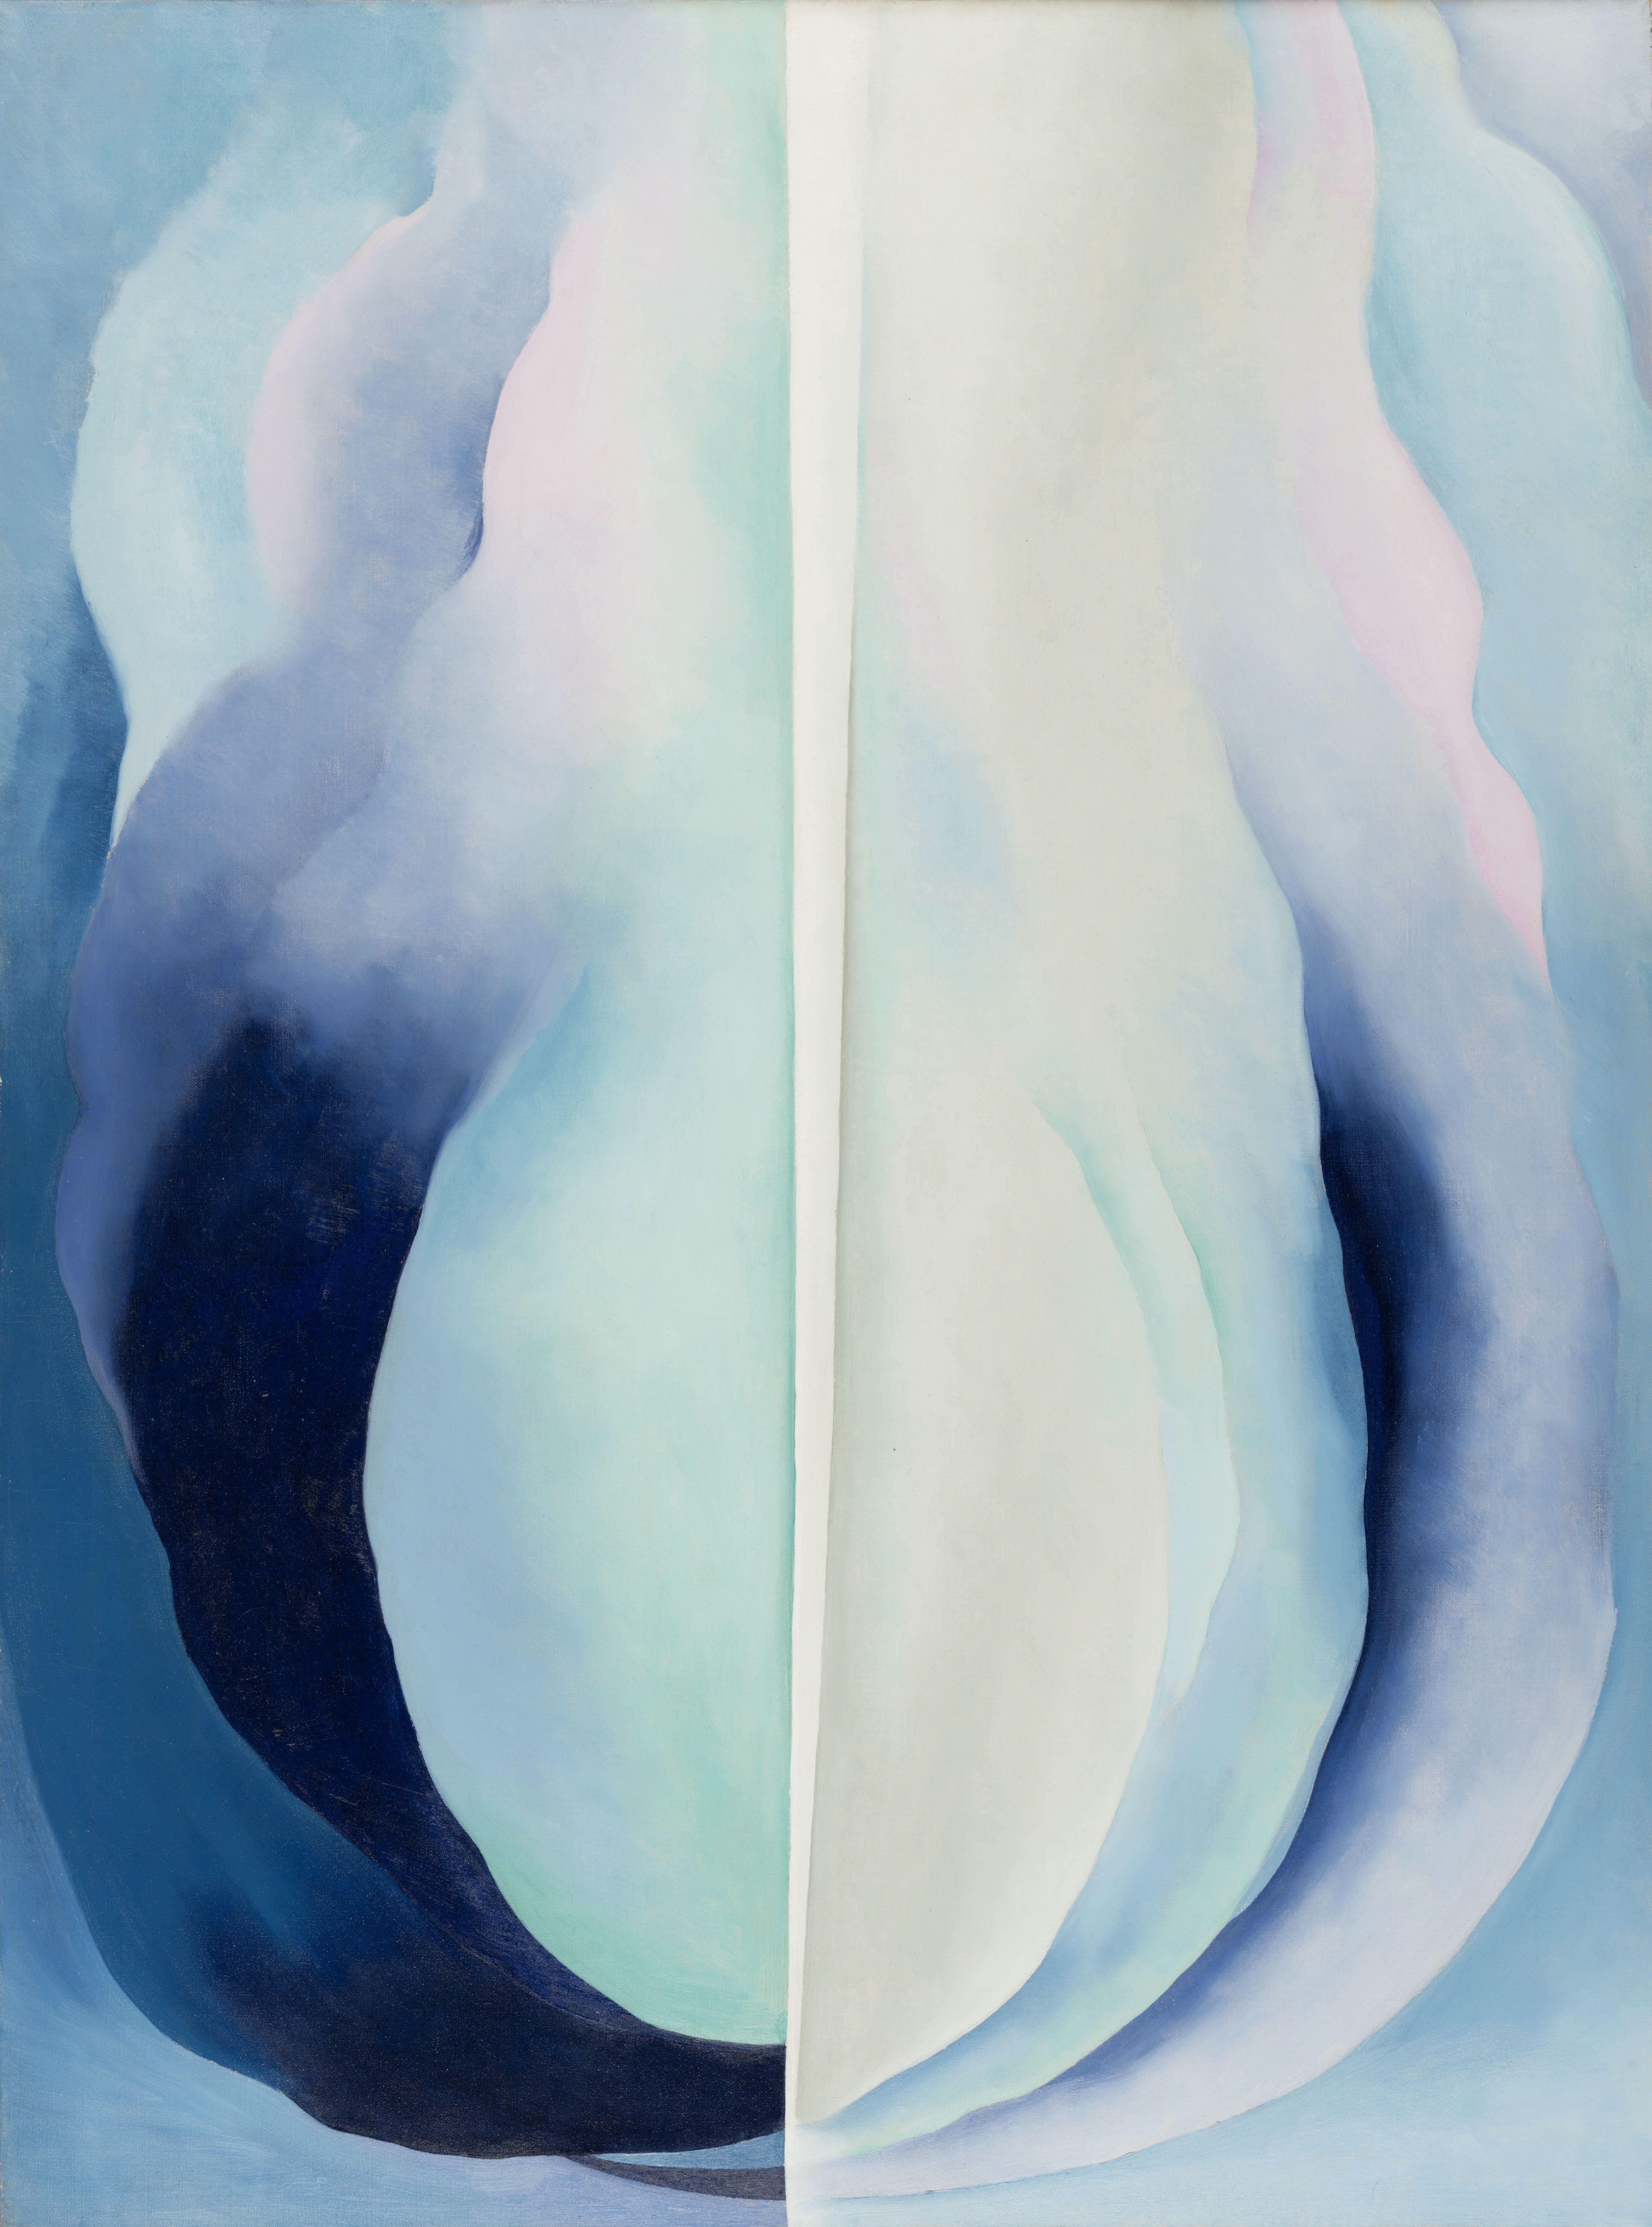 Georgia O'Keeffe. Abstraction Blue. 1927. Source: MoMA